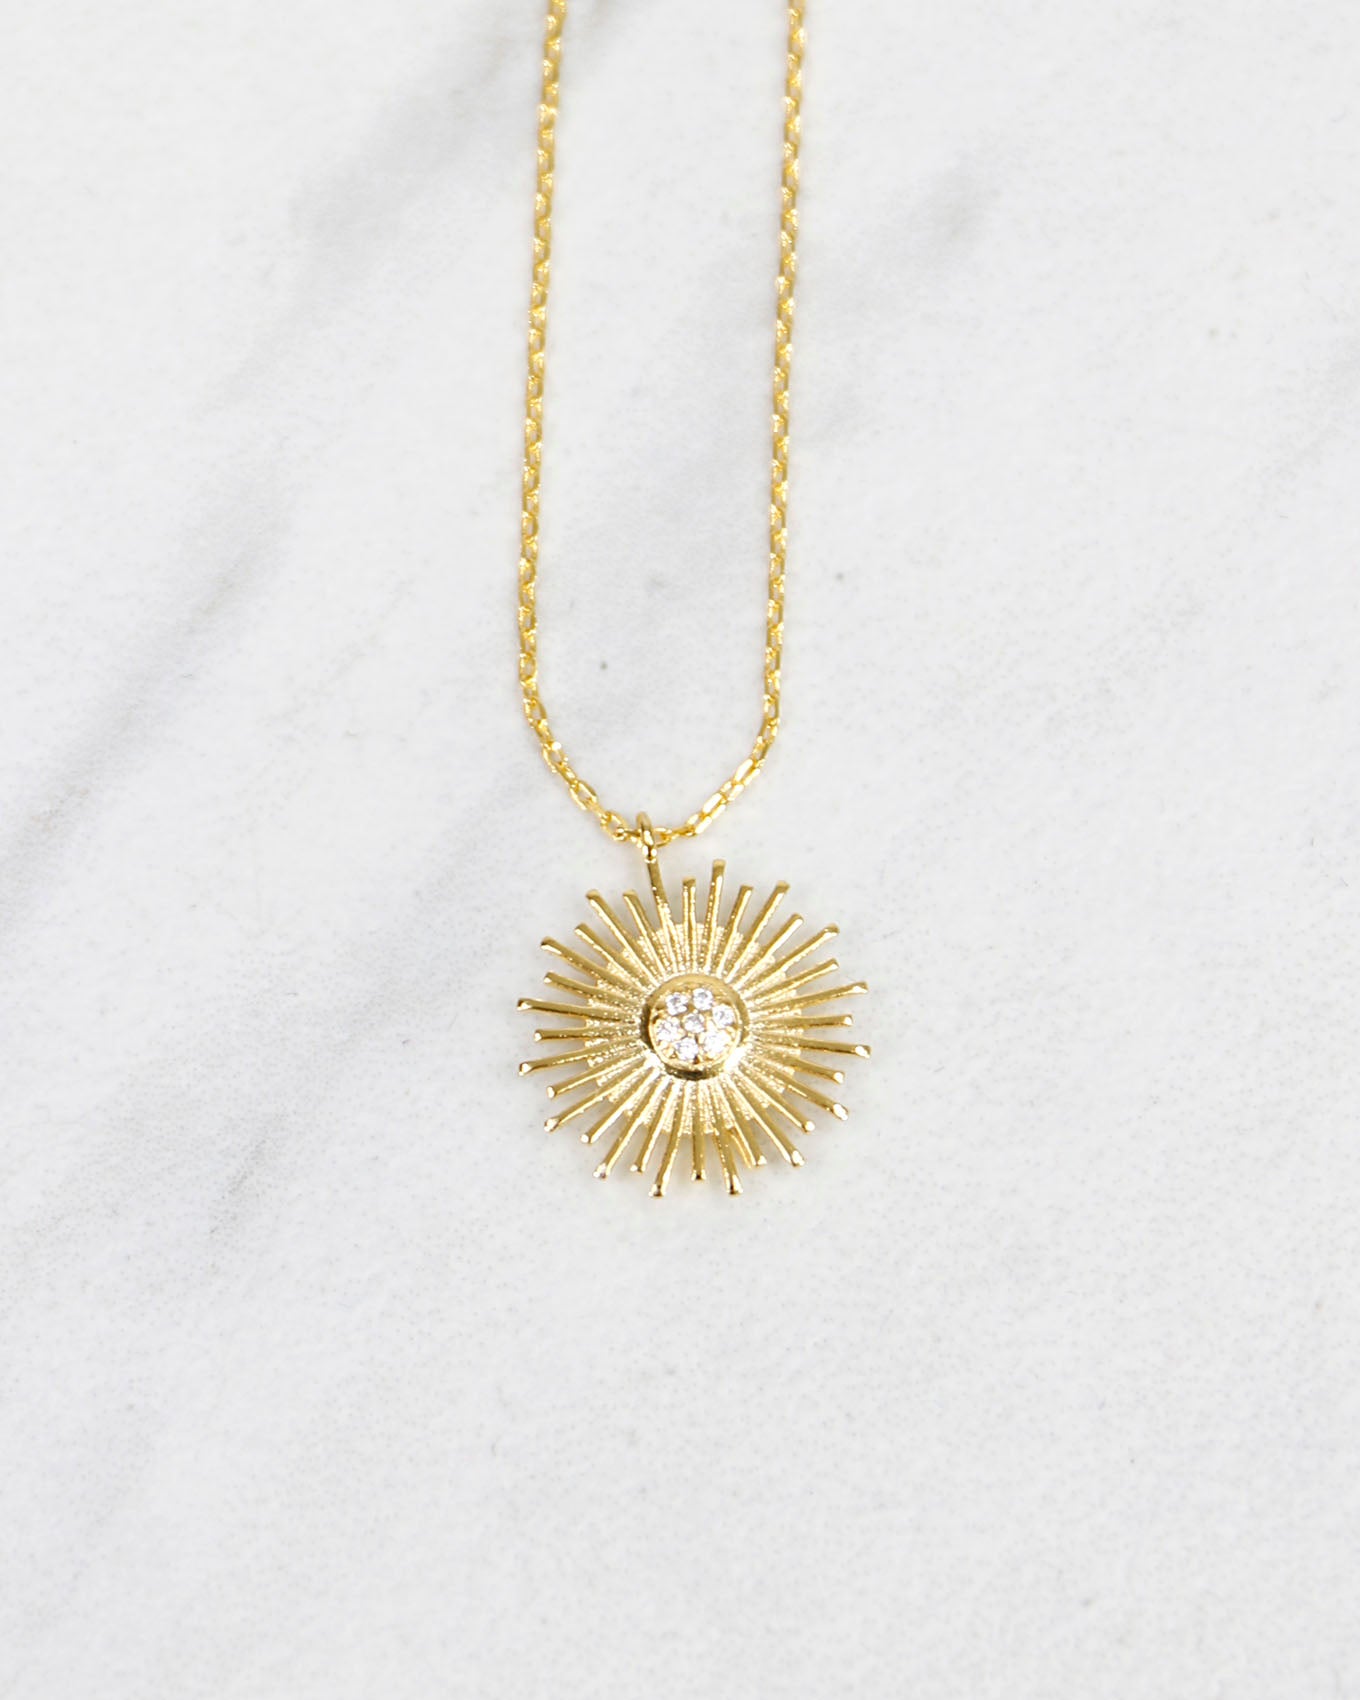 Close up of Gold Sunburst Necklace